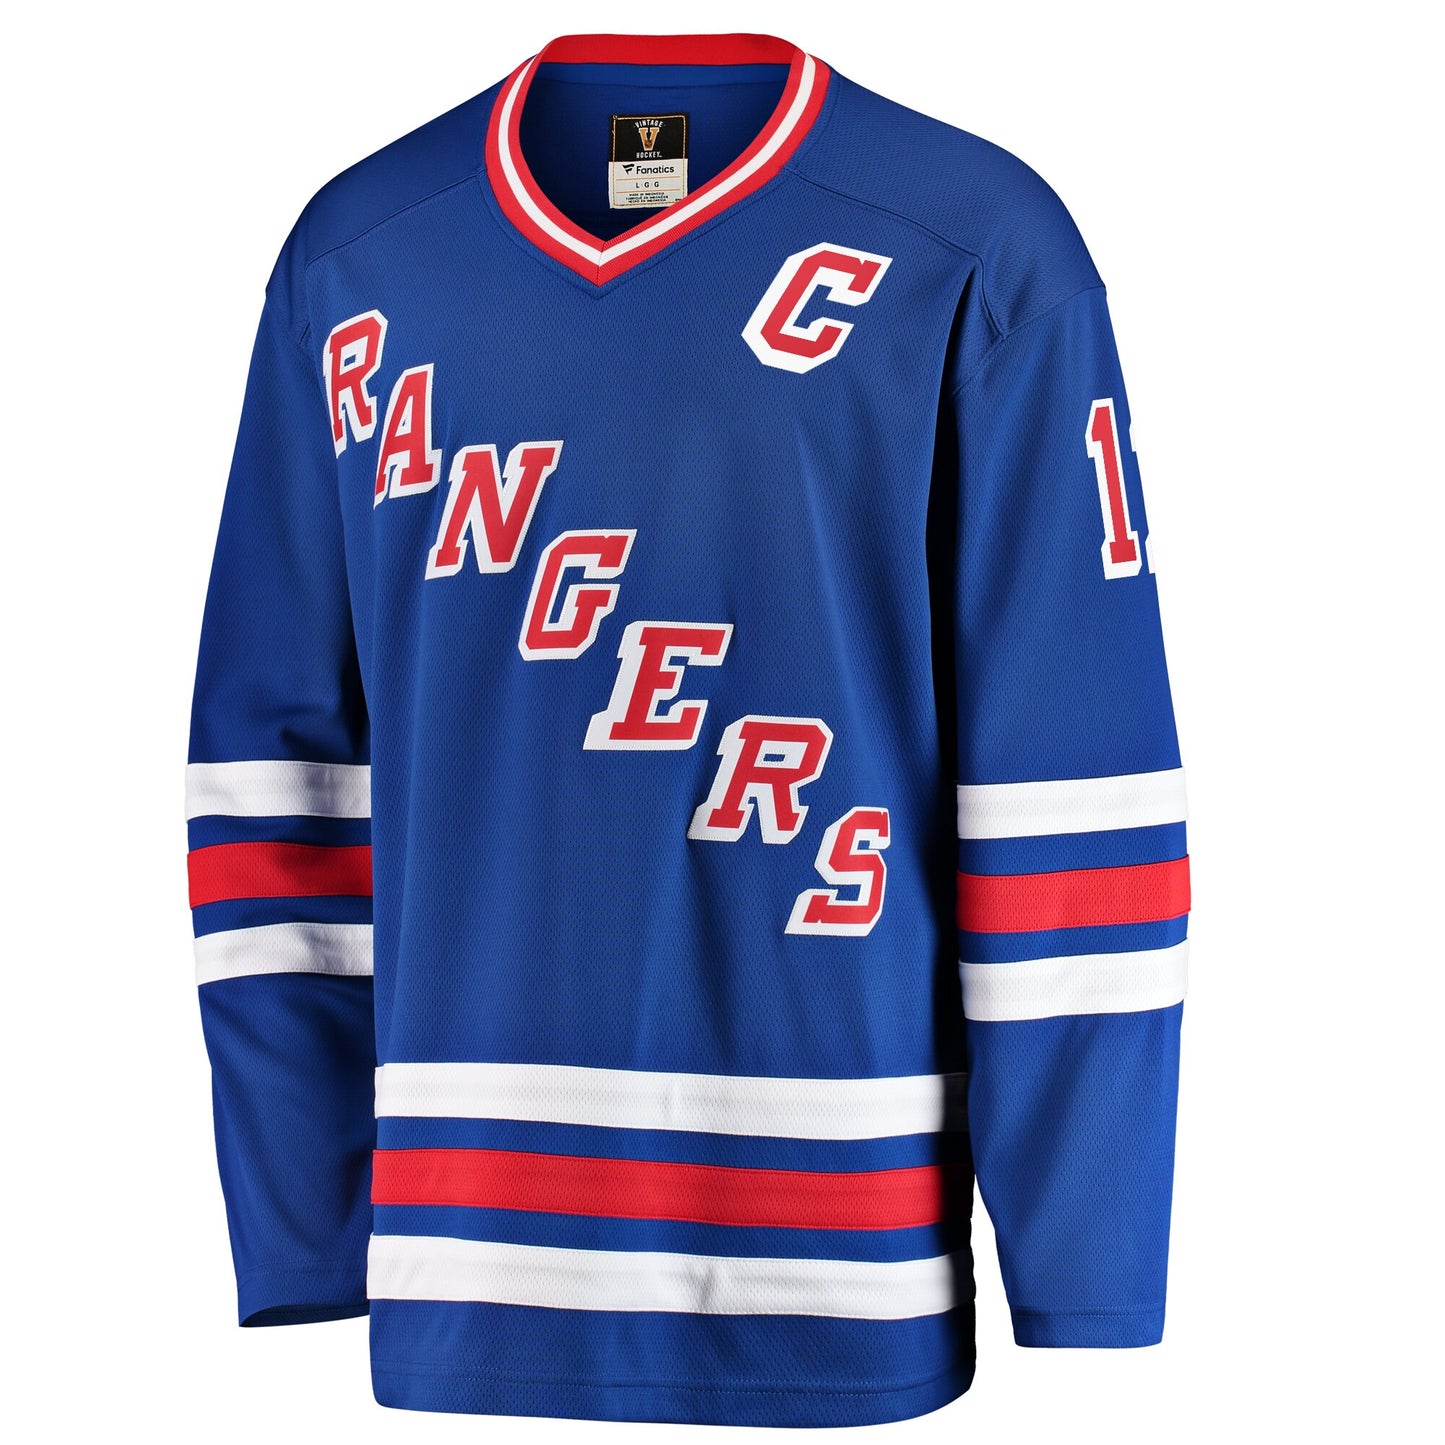 Mark Messier New York Rangers Fanatics Branded Premier Breakaway Retired Player Jersey - Blue